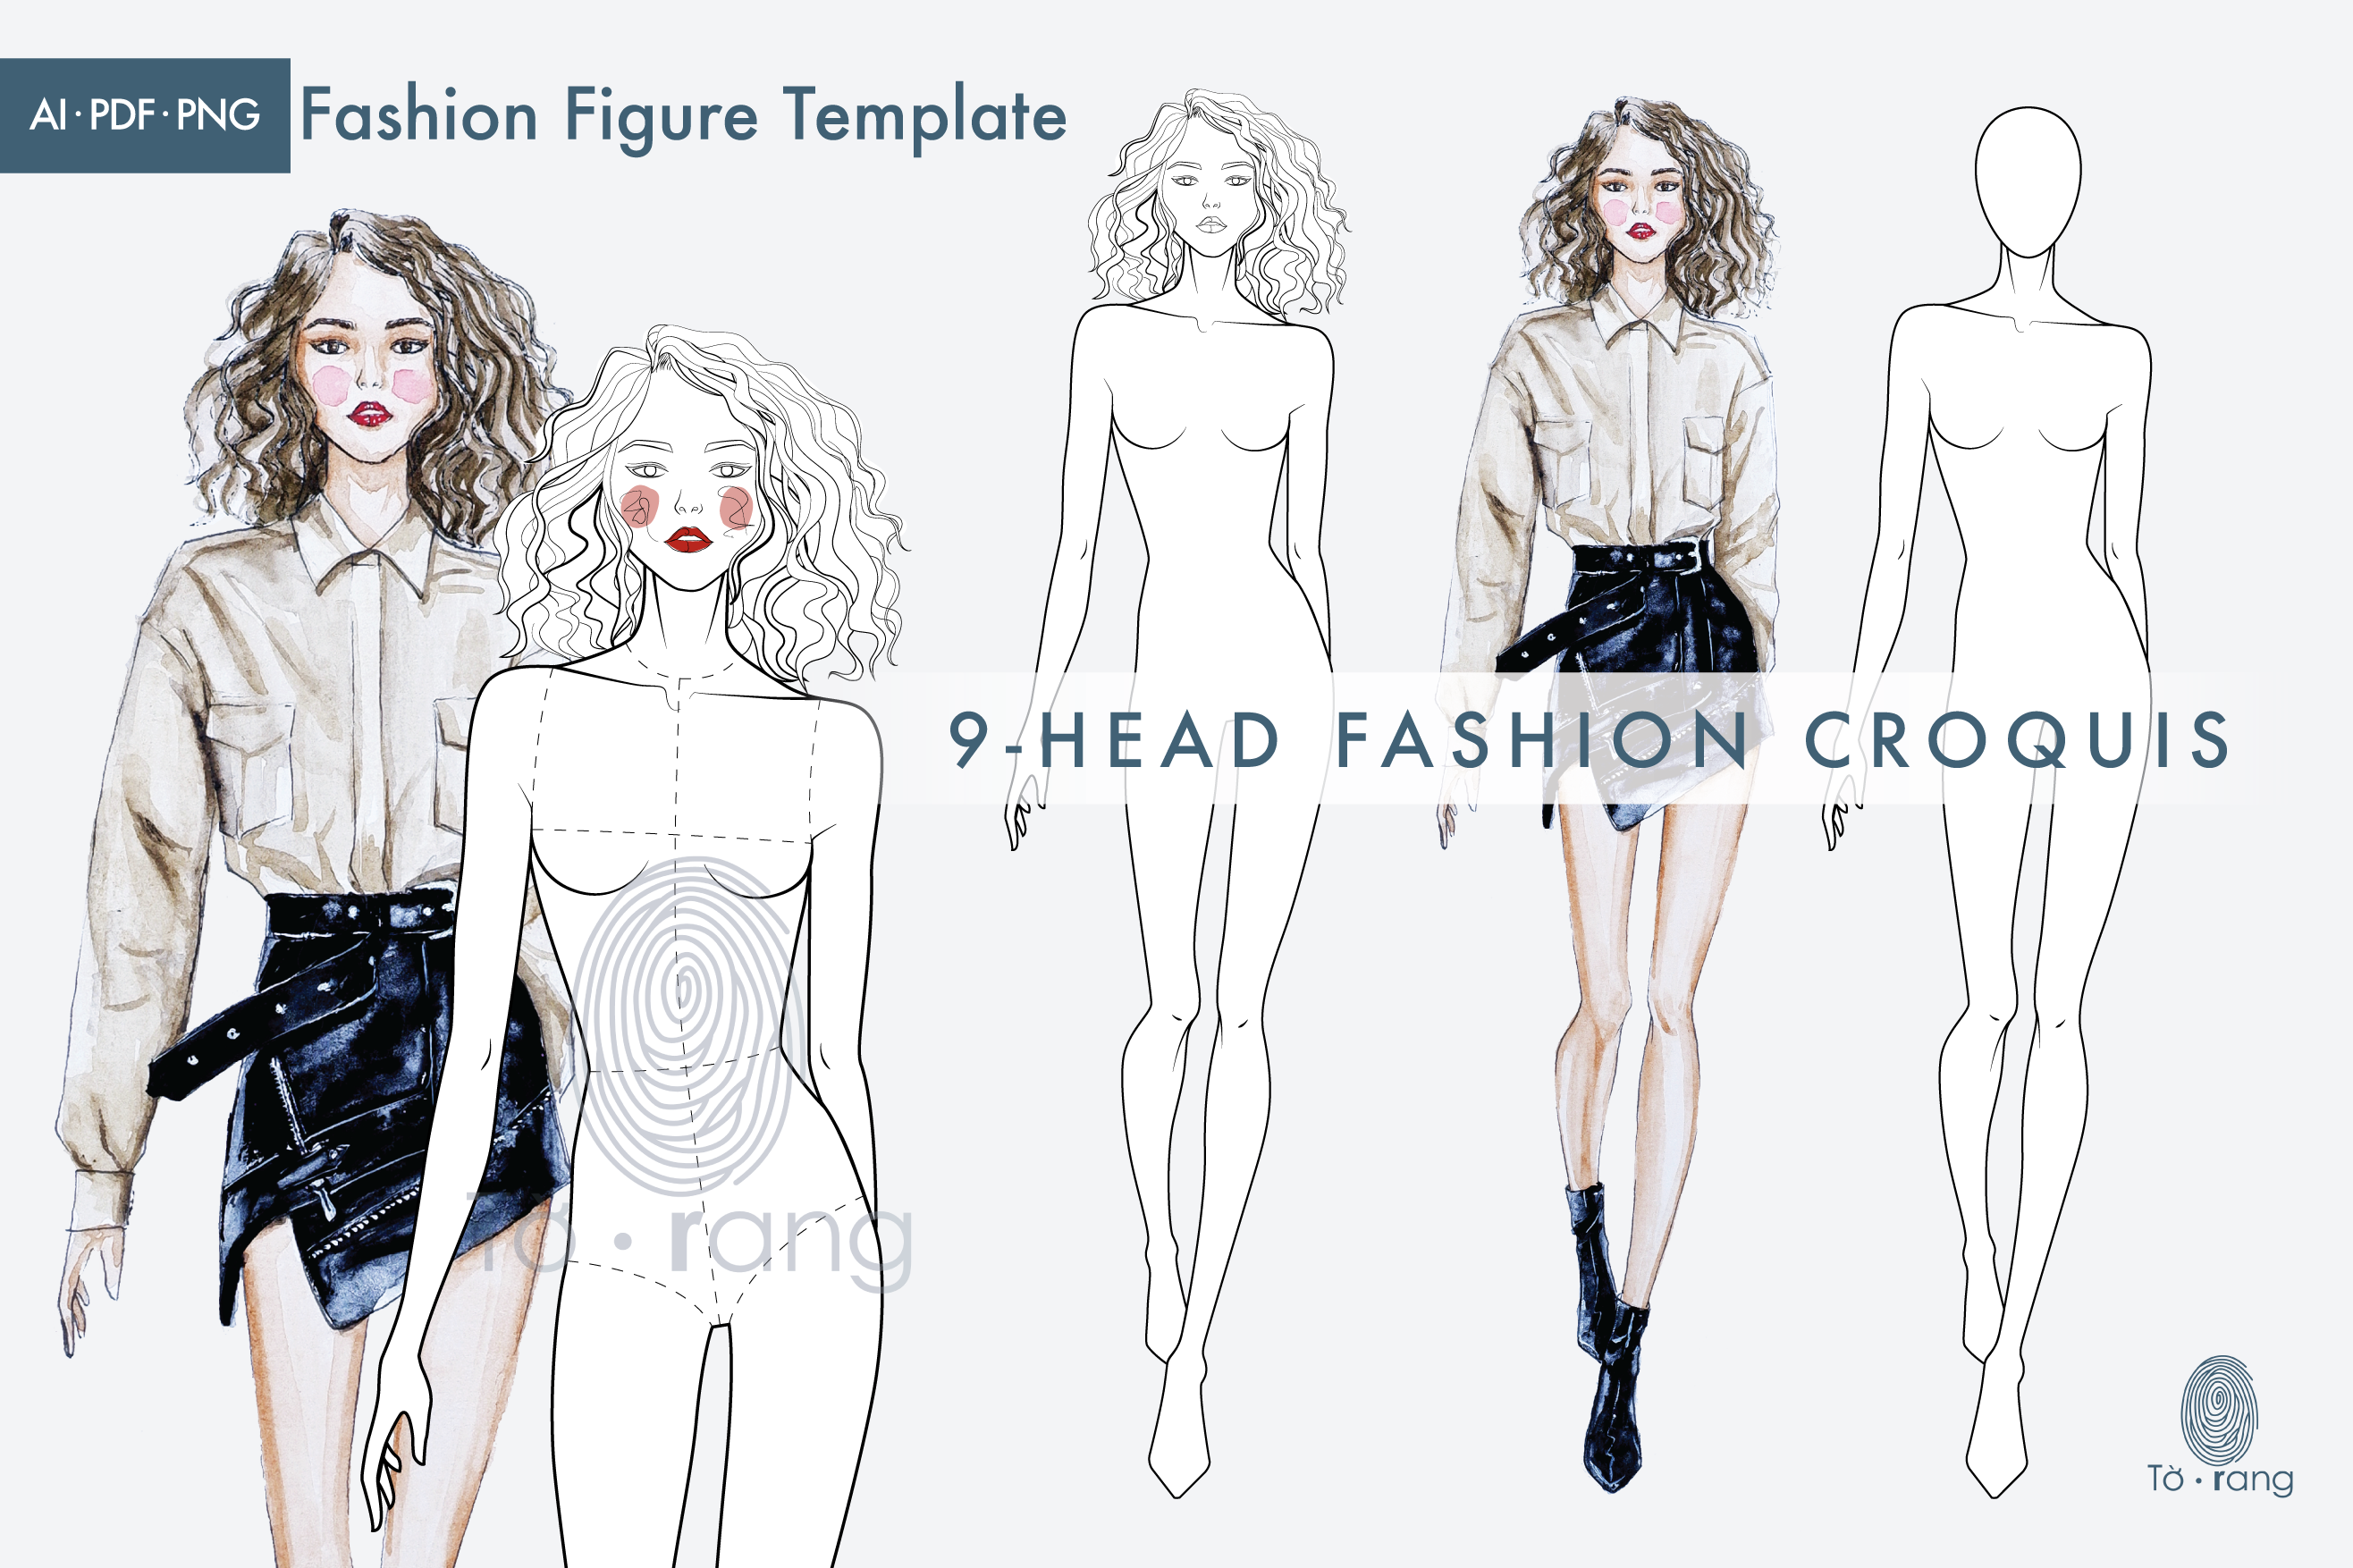 Female Fashion Croquis, 4 Poses Figure Templates, Designer Croquis, Line  Fashion Figures, Procreate Croquis, Female Model Poses 